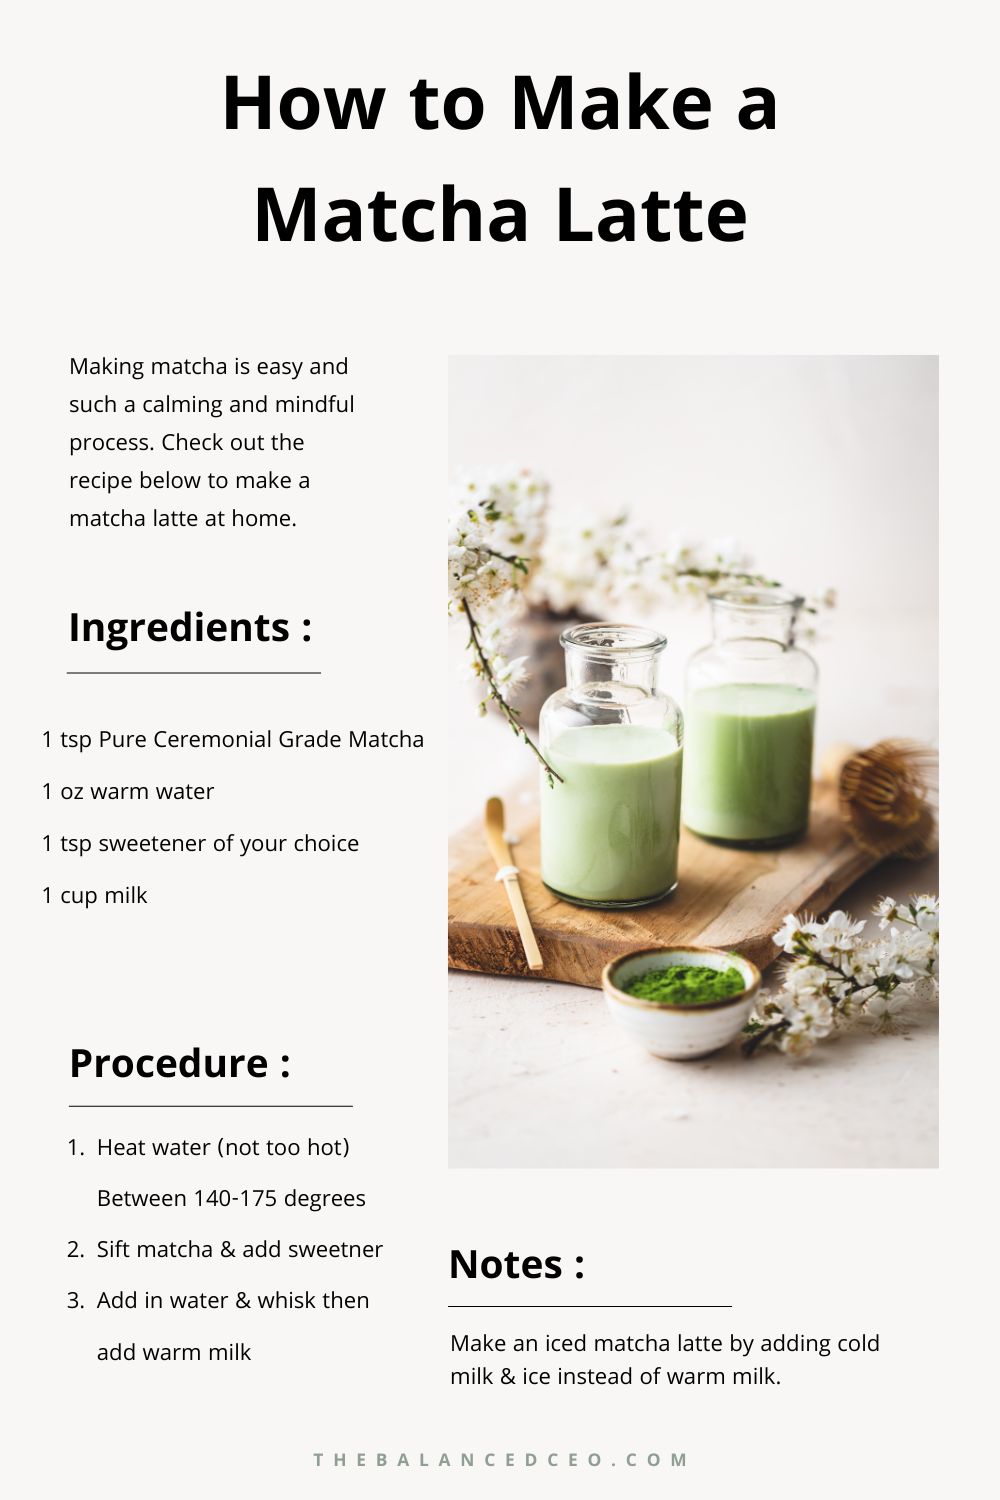 How to Make Matcha Latte at Home